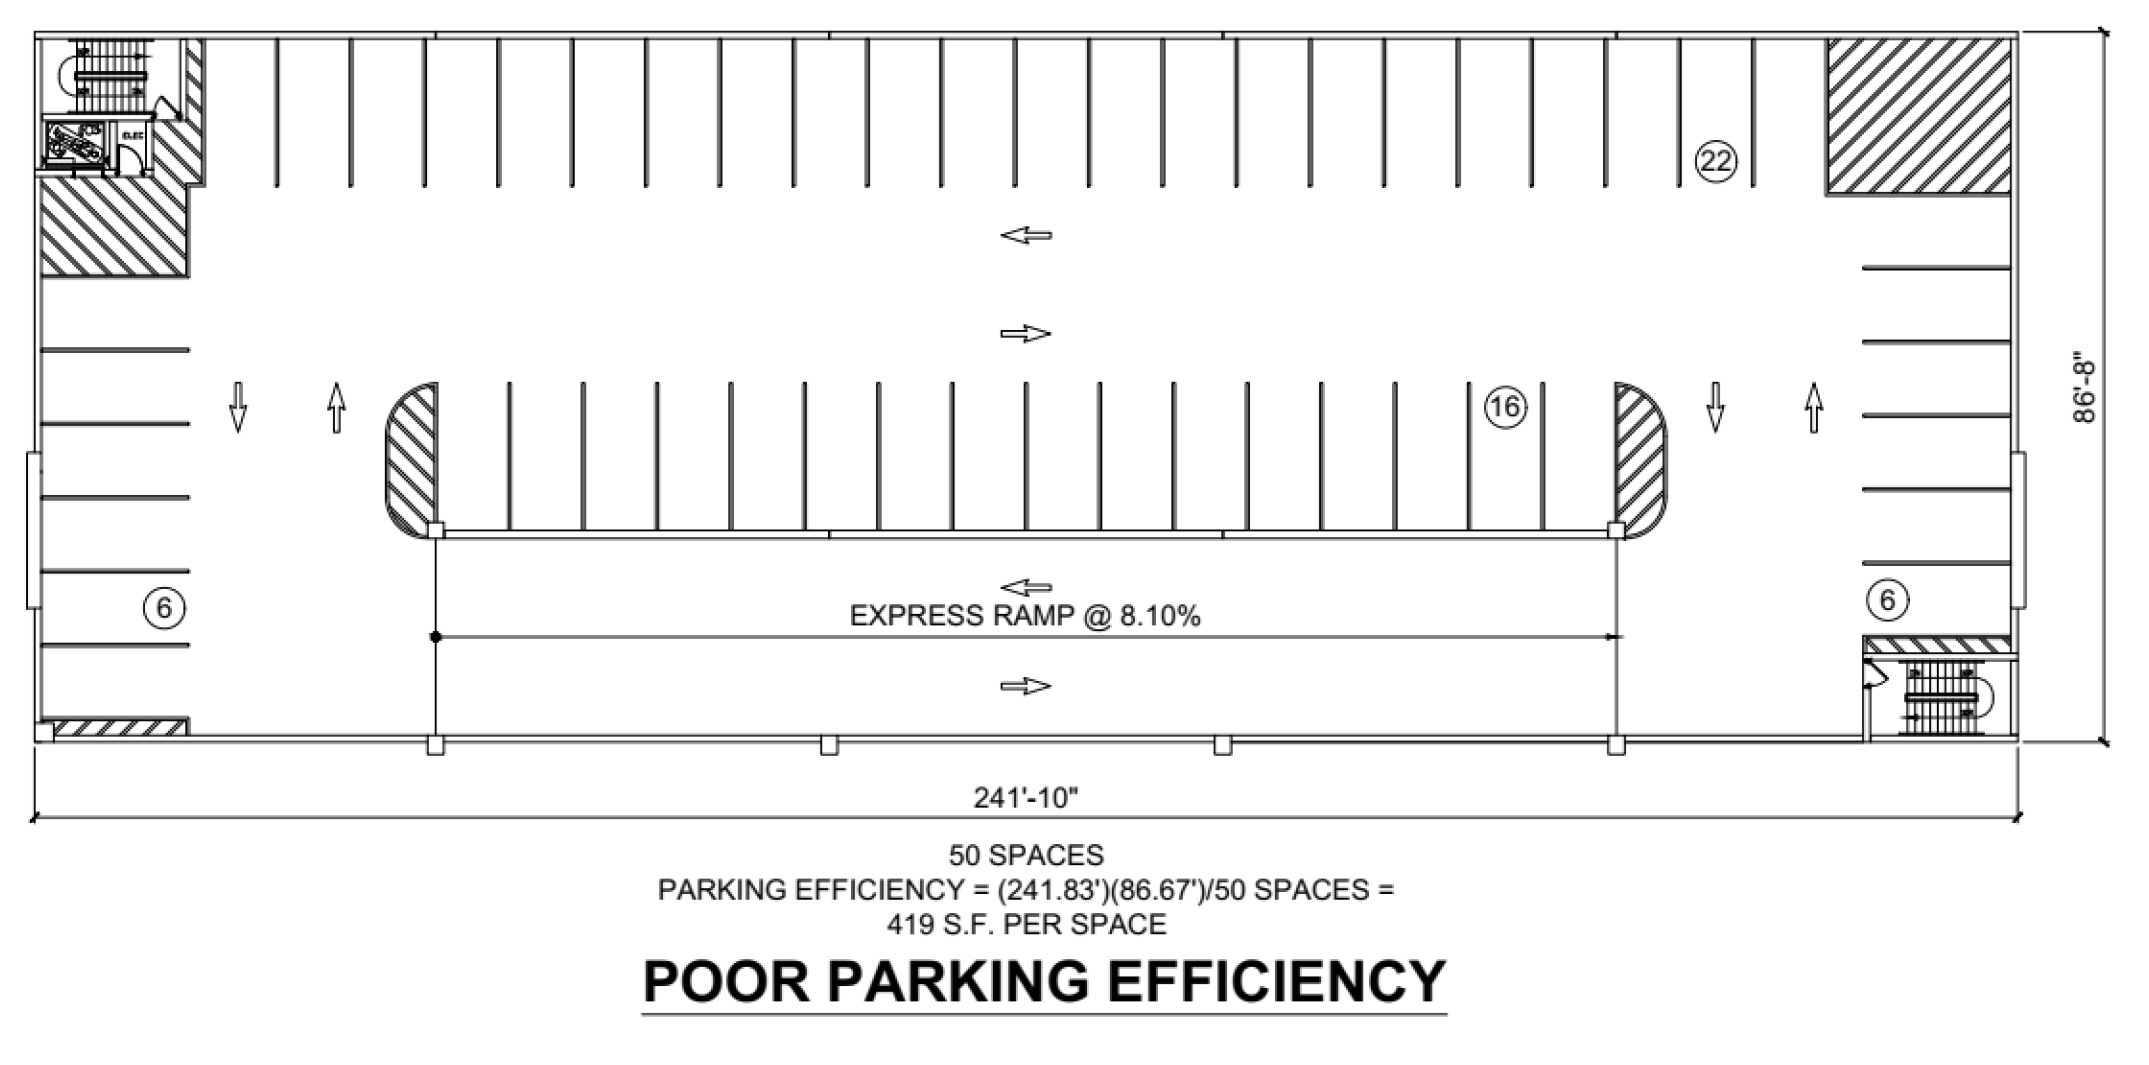 Example Of Poor Parking Efficiency